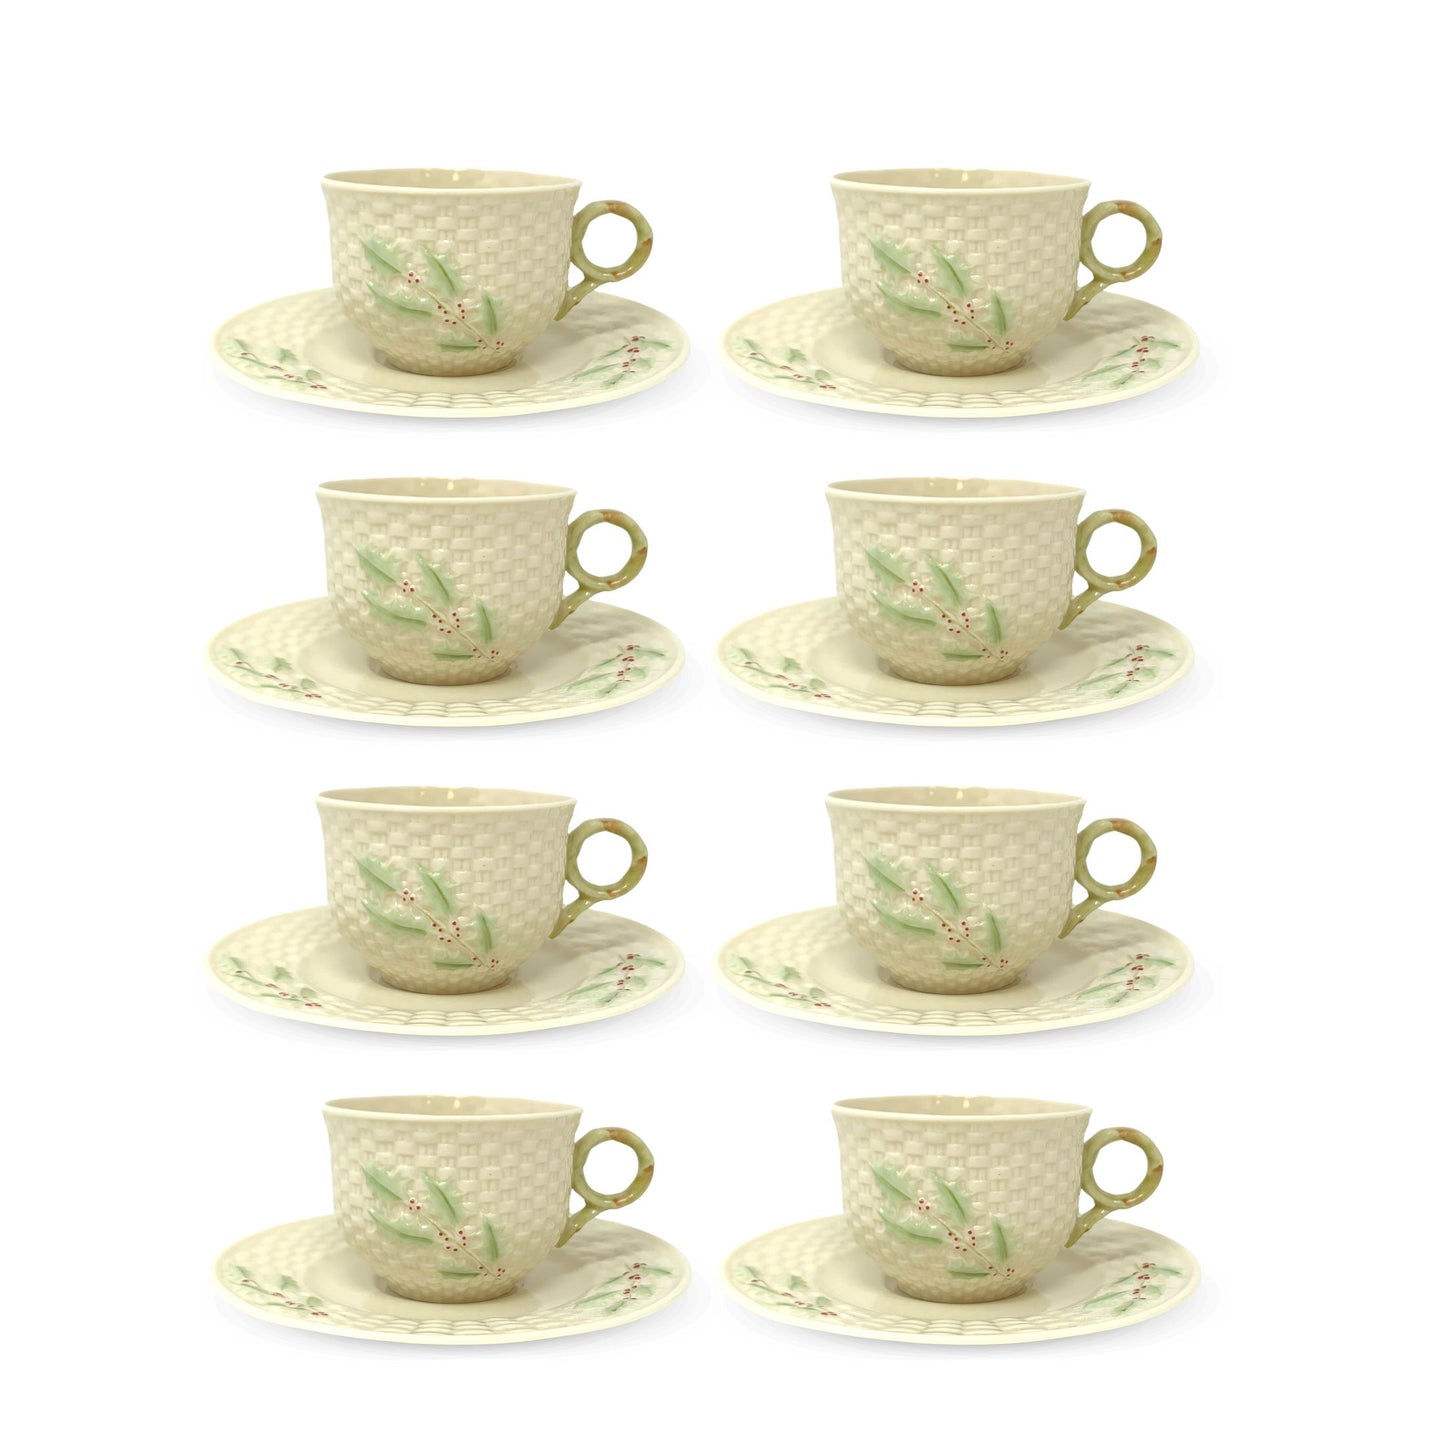 Belleek "Enchanted Holly" Set of 8 Cups & Saucers (16pcs)